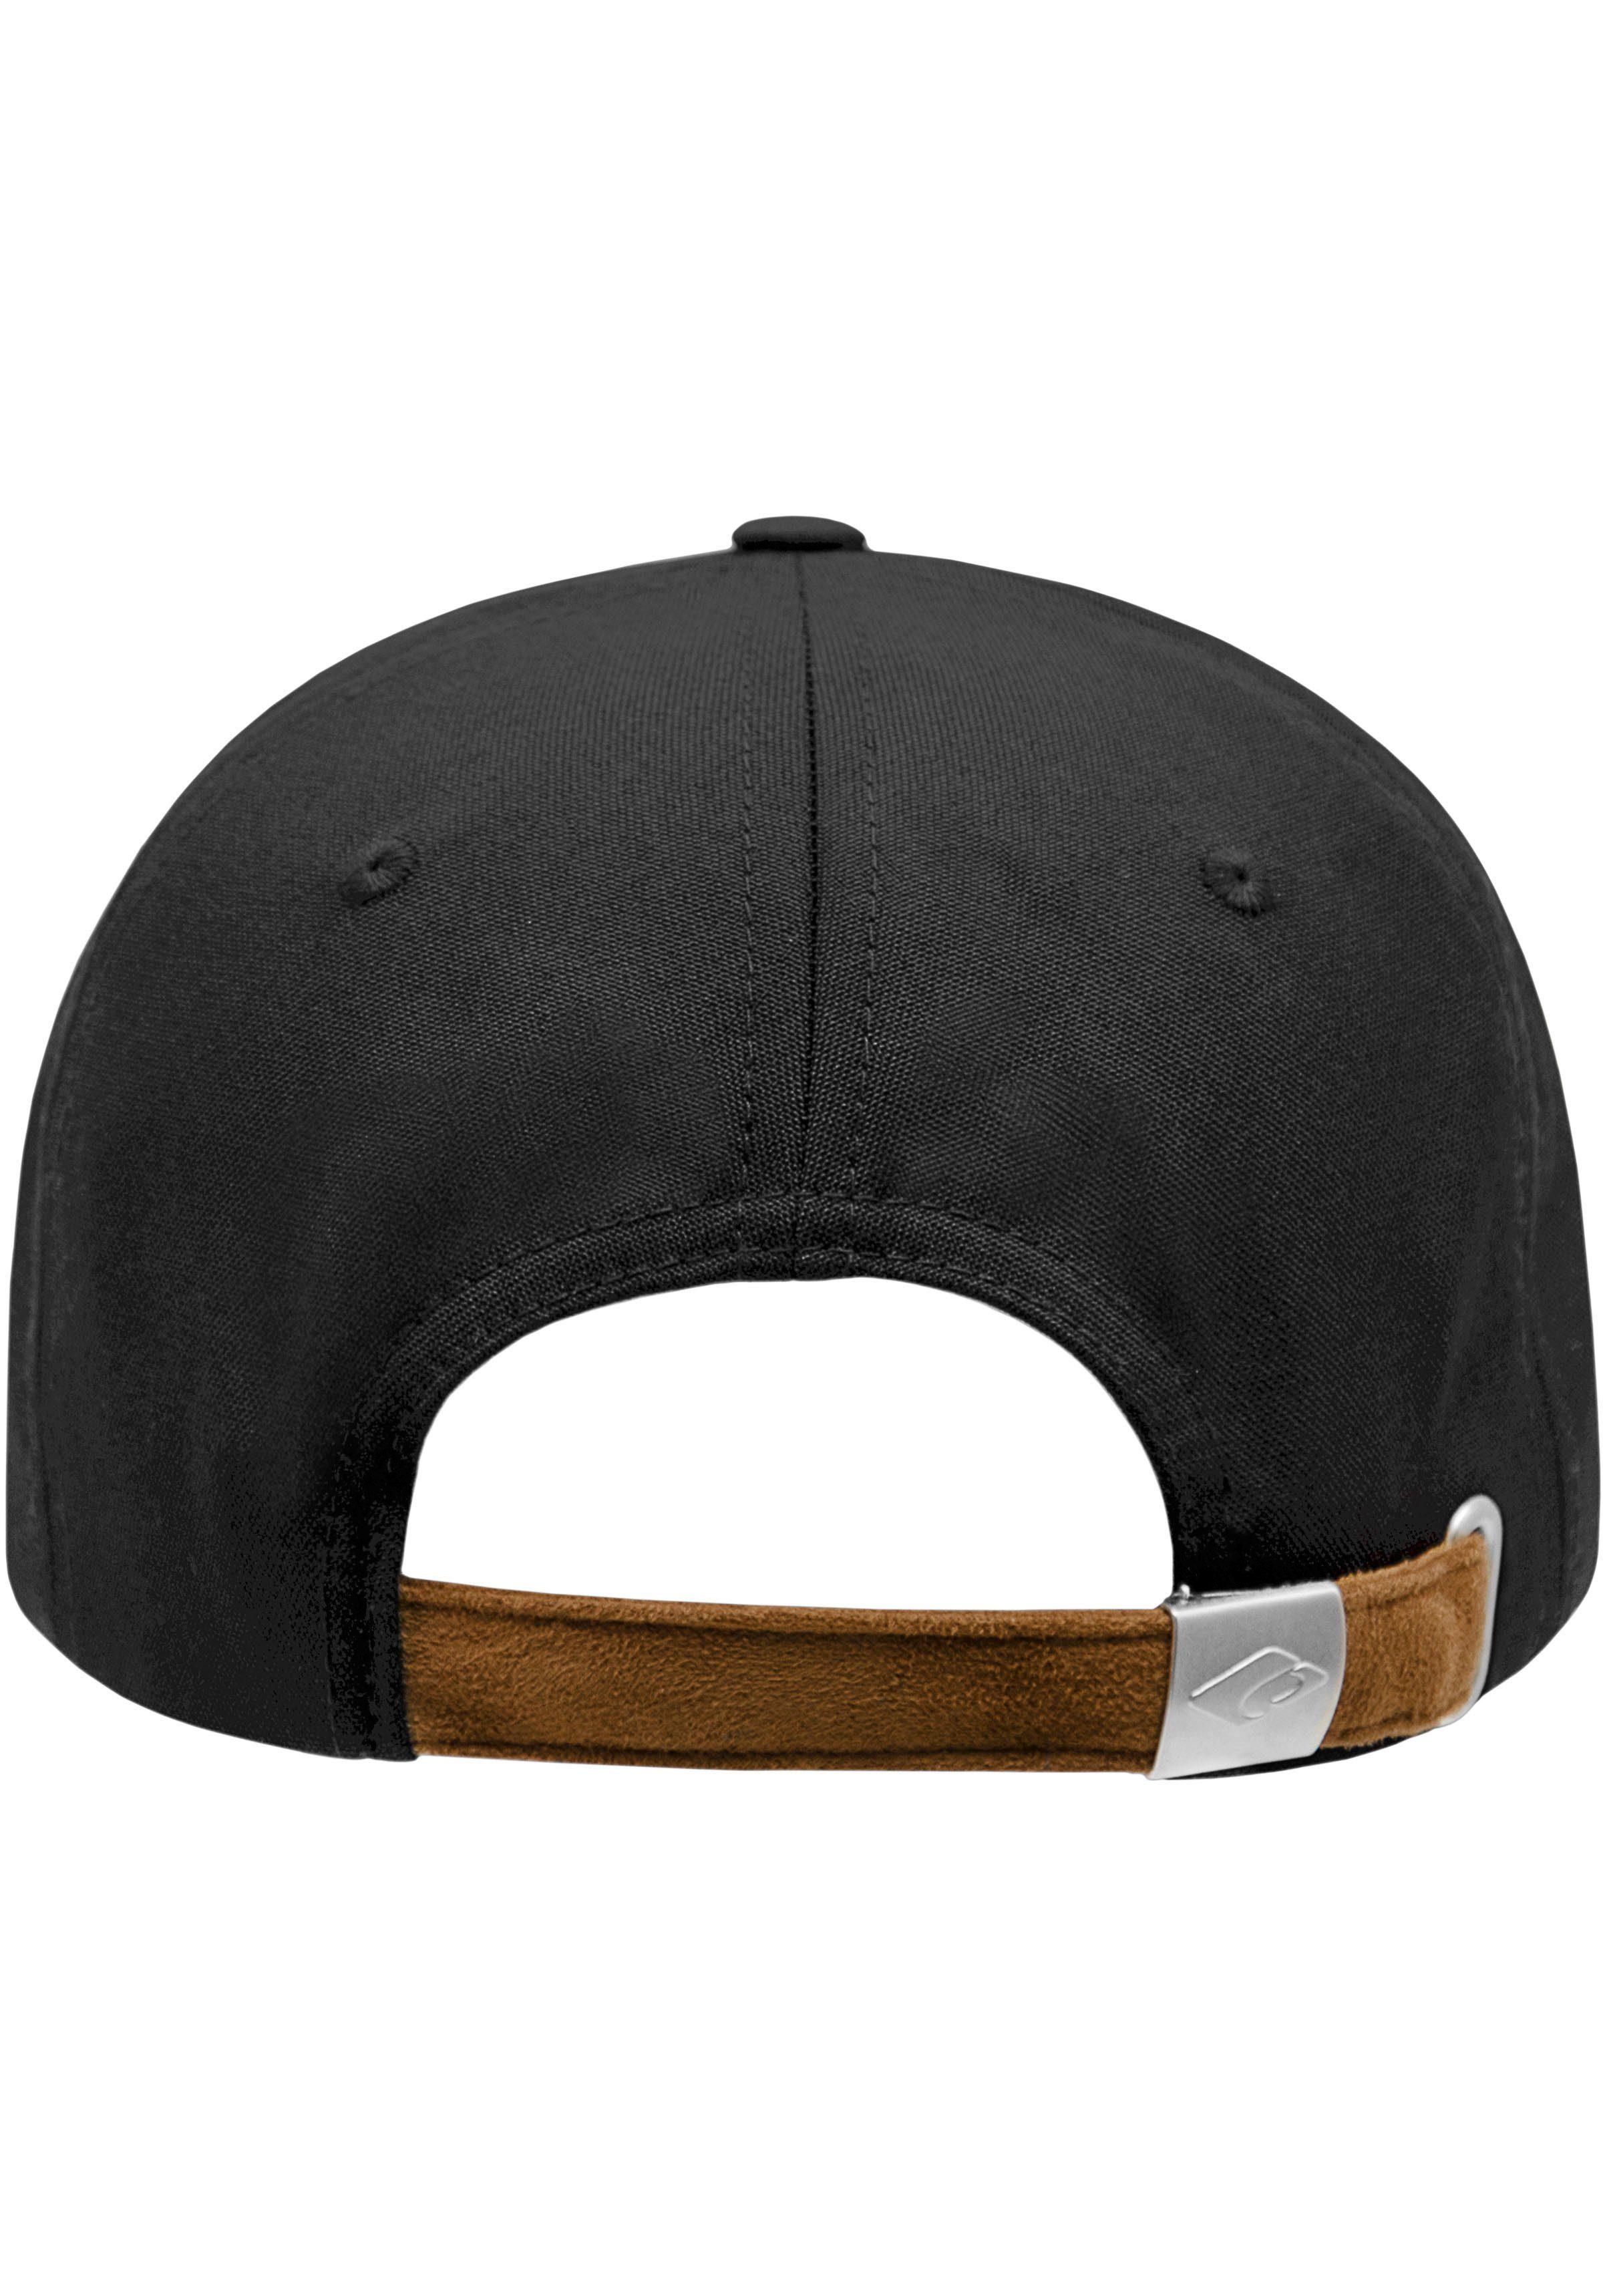 Hat Optik, Baseball schwarz verstellbar in Amadora melierter chillouts Cap Size, One